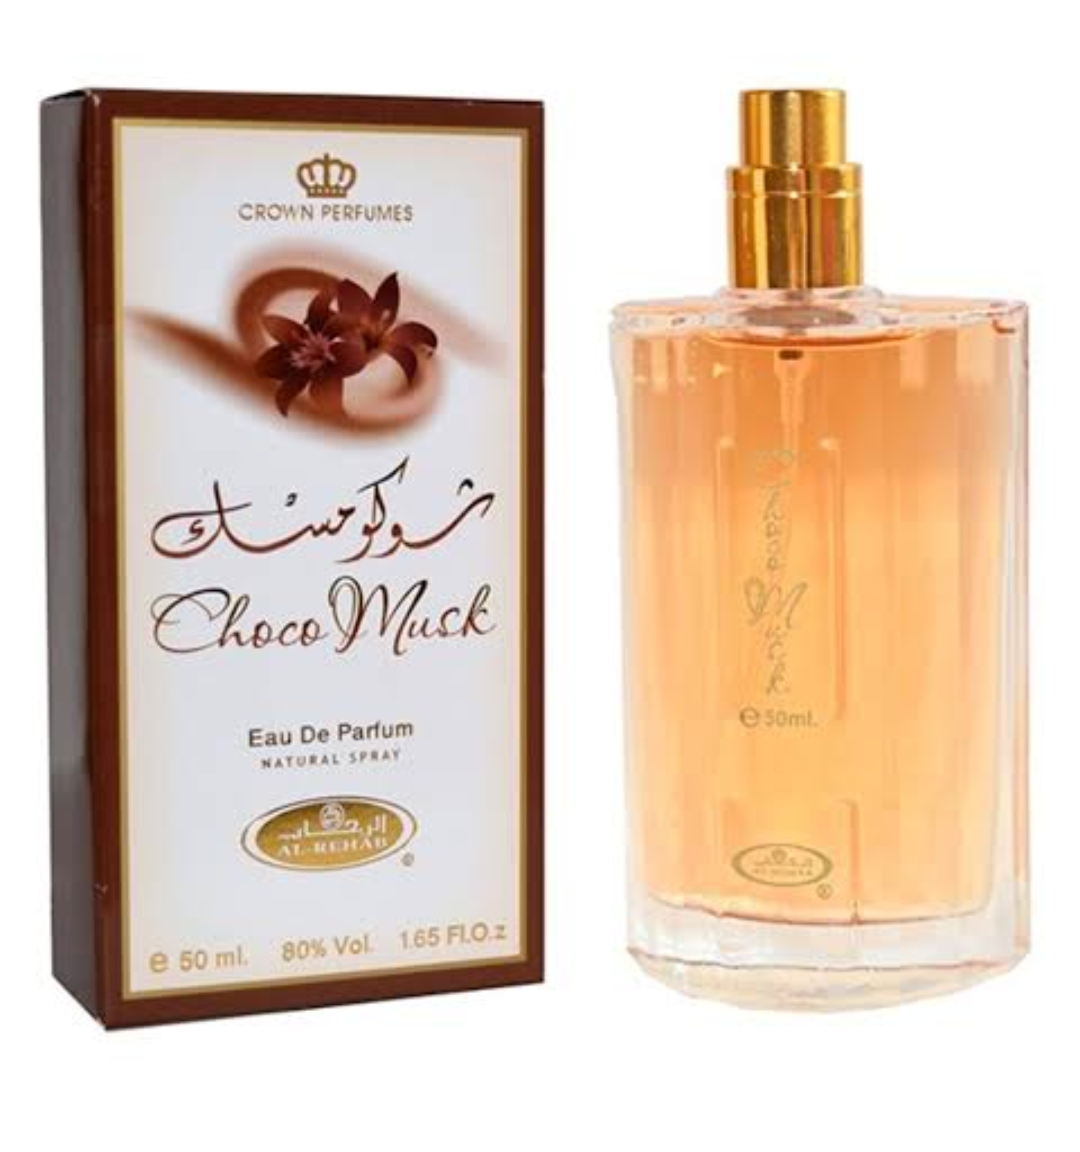 Al-Rehab Eau De Perfume CHOCO MUSK (Арабская парфюмерная вода ЧОКО МУСК, Аль-Рехаб), СПРЕЙ, 50 мл.